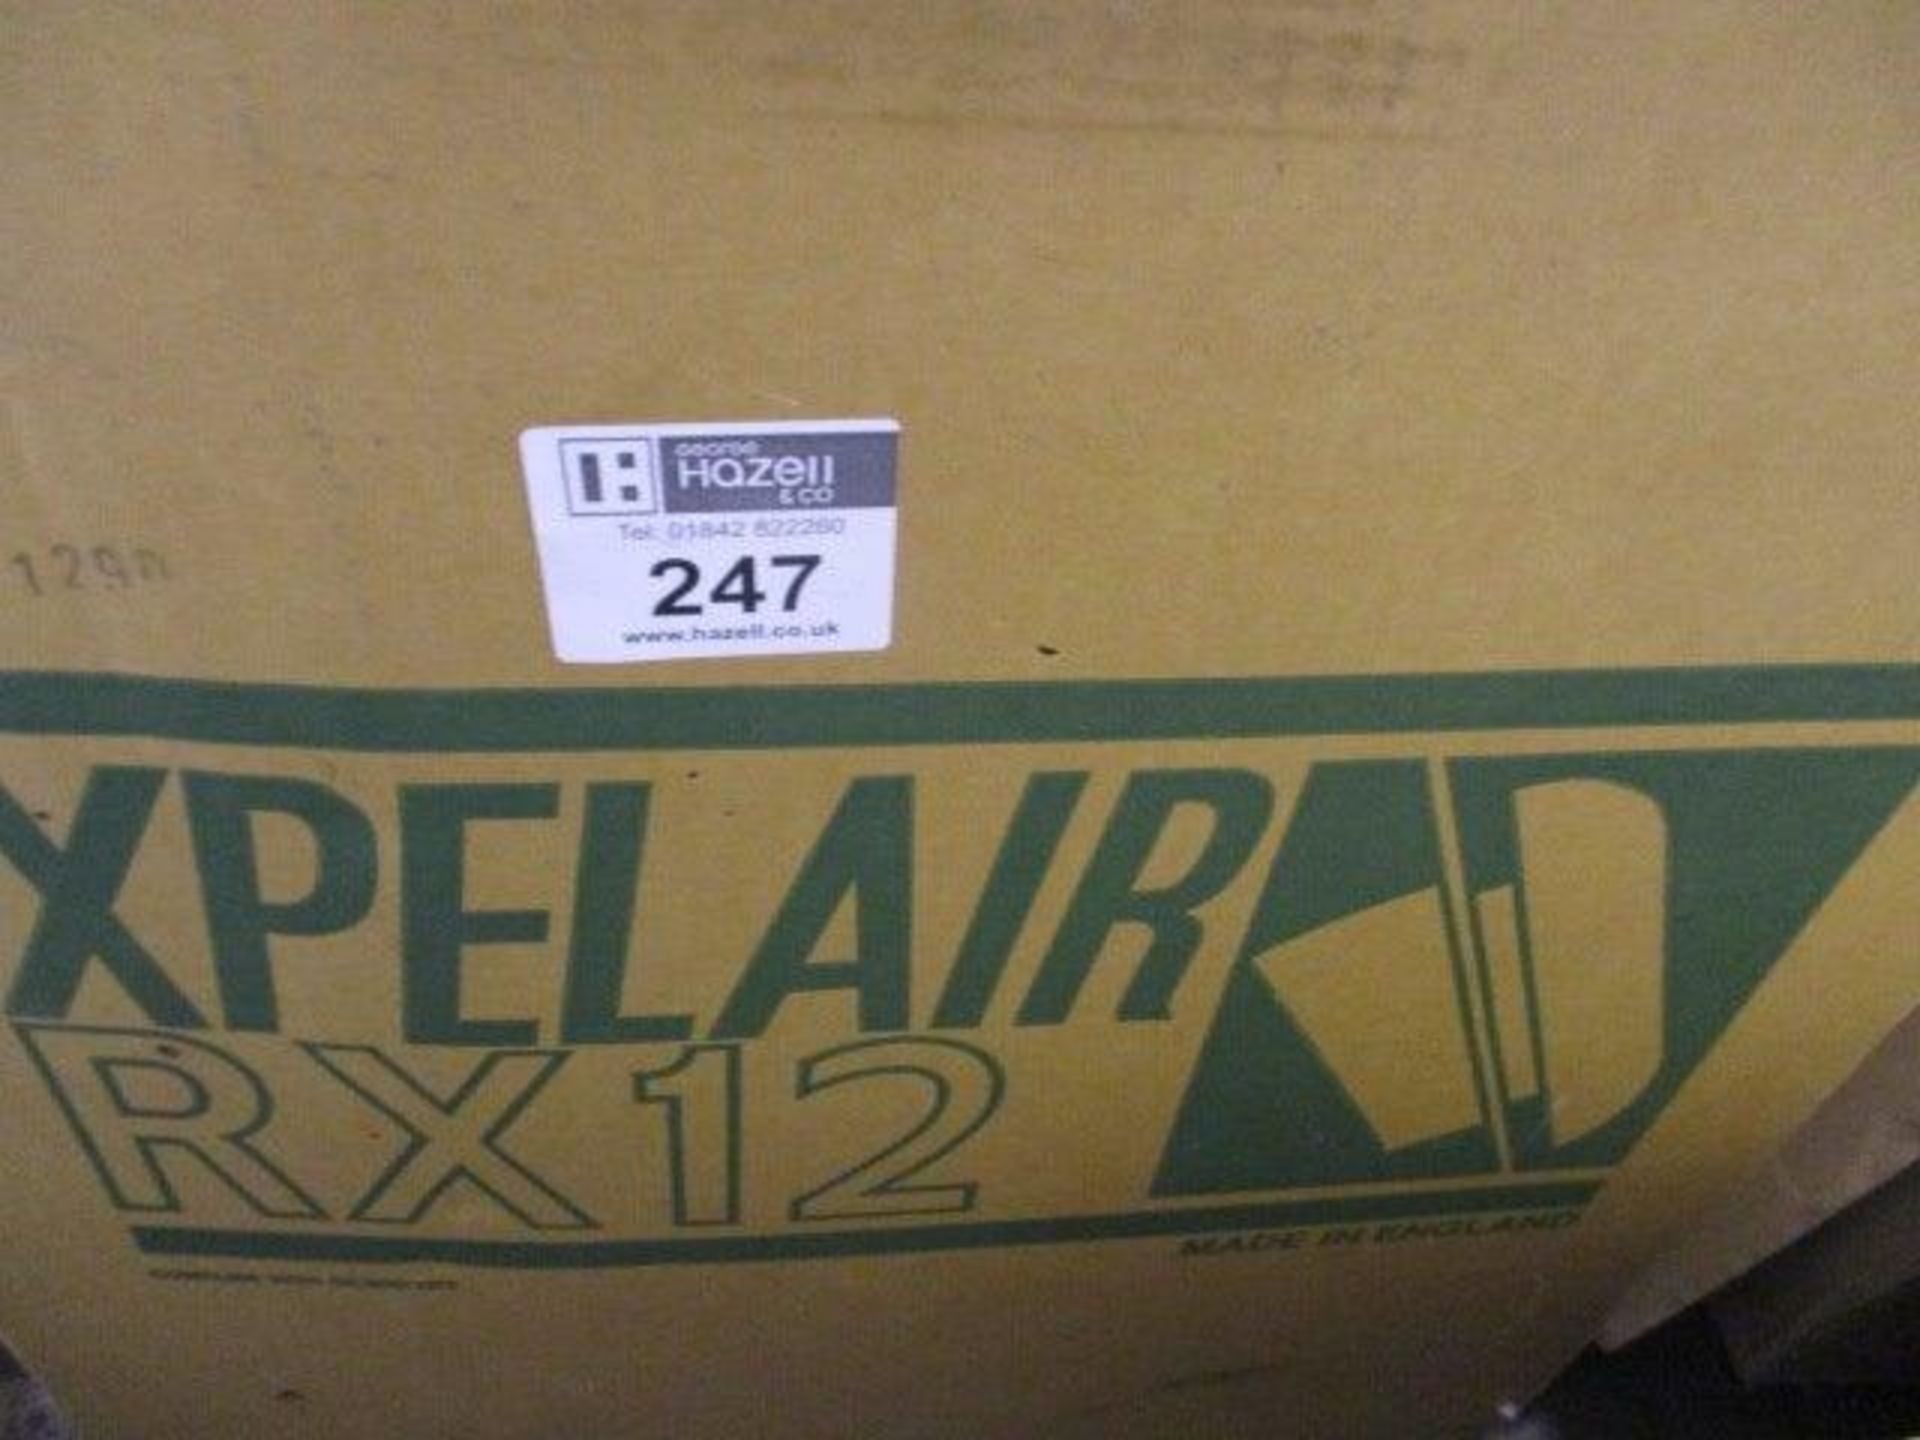 1 X XPELAIR RX12